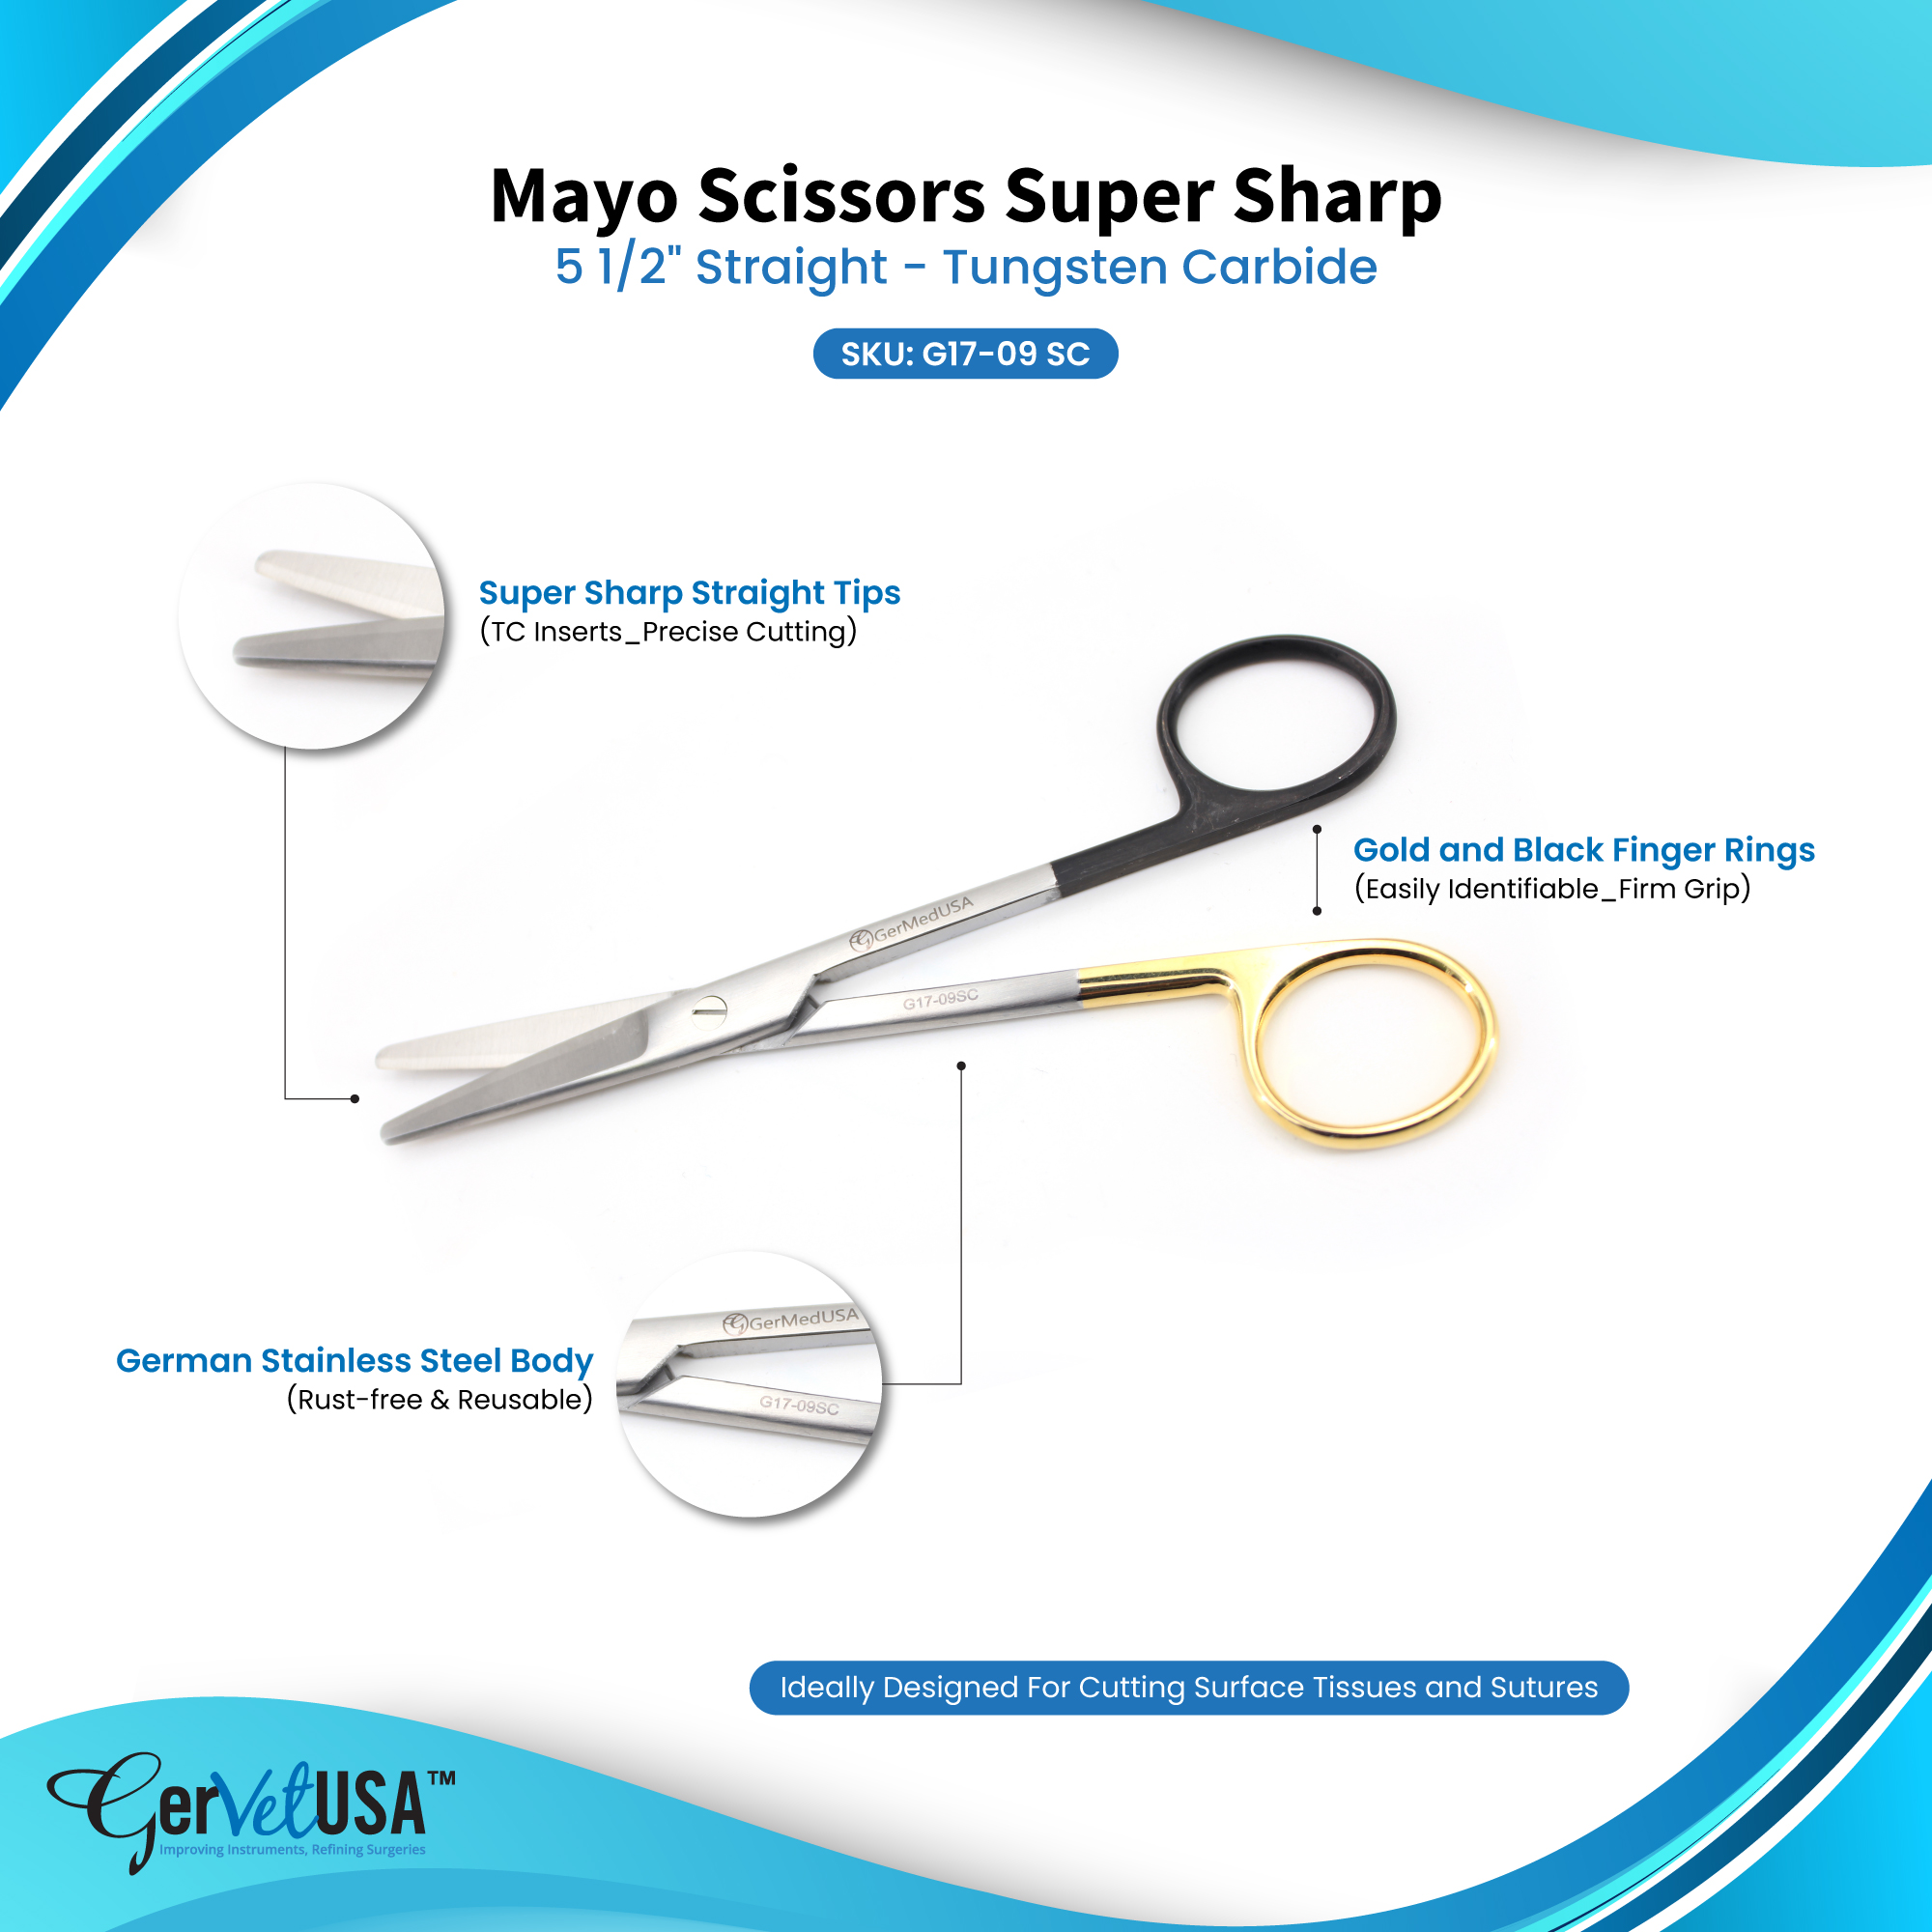 https://www.gervetusa.com/up_data/products/images/ssmss-super-sharp-mayo-scissors-straight-tungsten-carbide-1654520576-.JPG